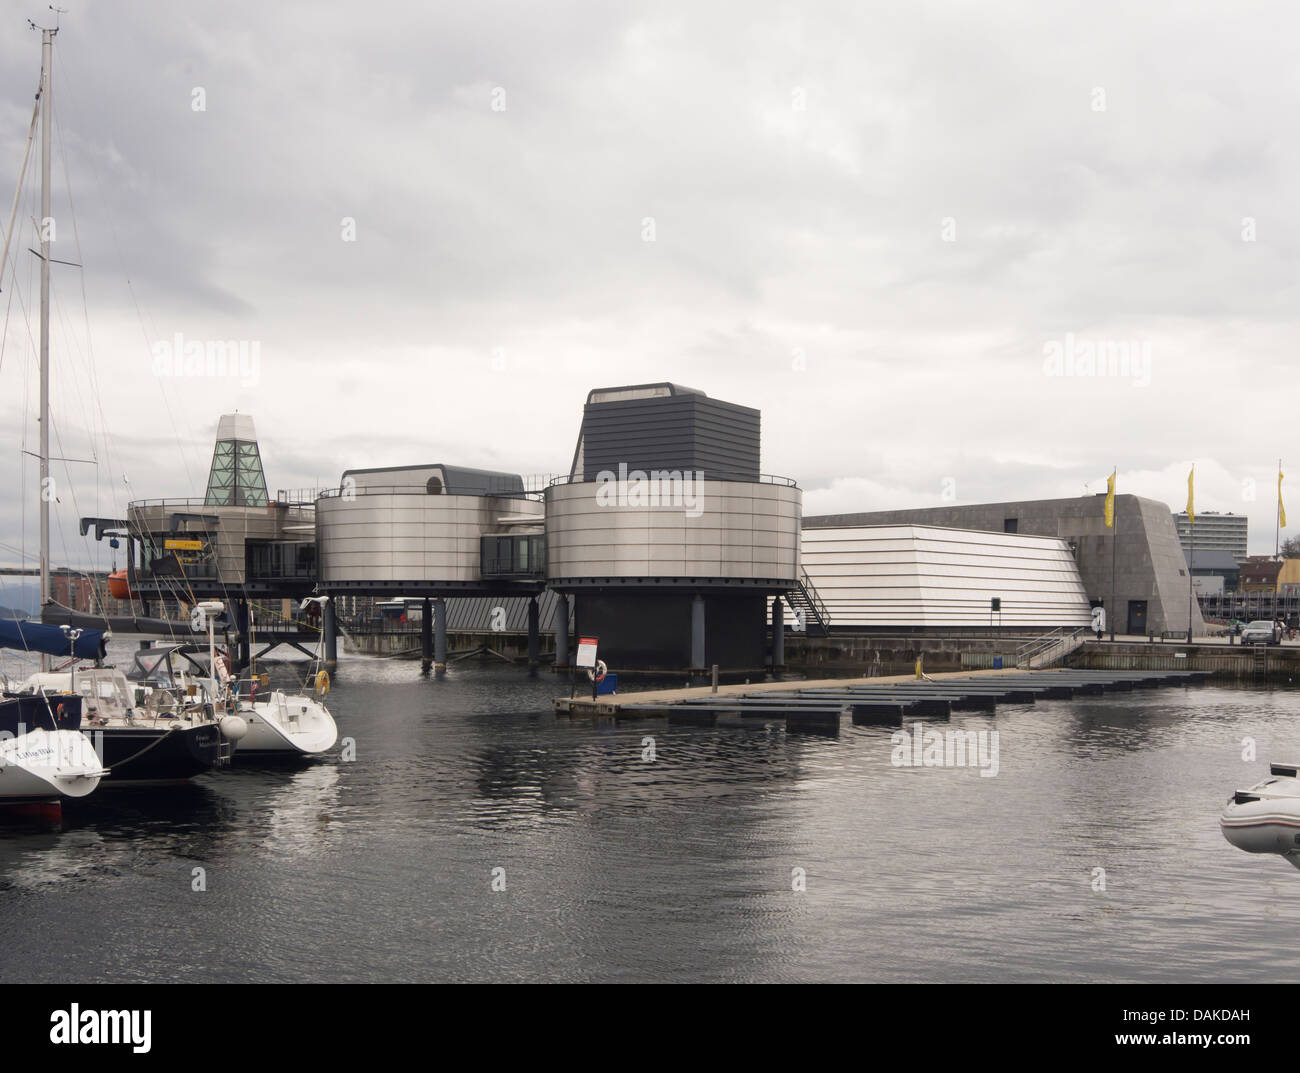 Oil museum in the harbour of Stavanger Norway, building exterior Stock Photo